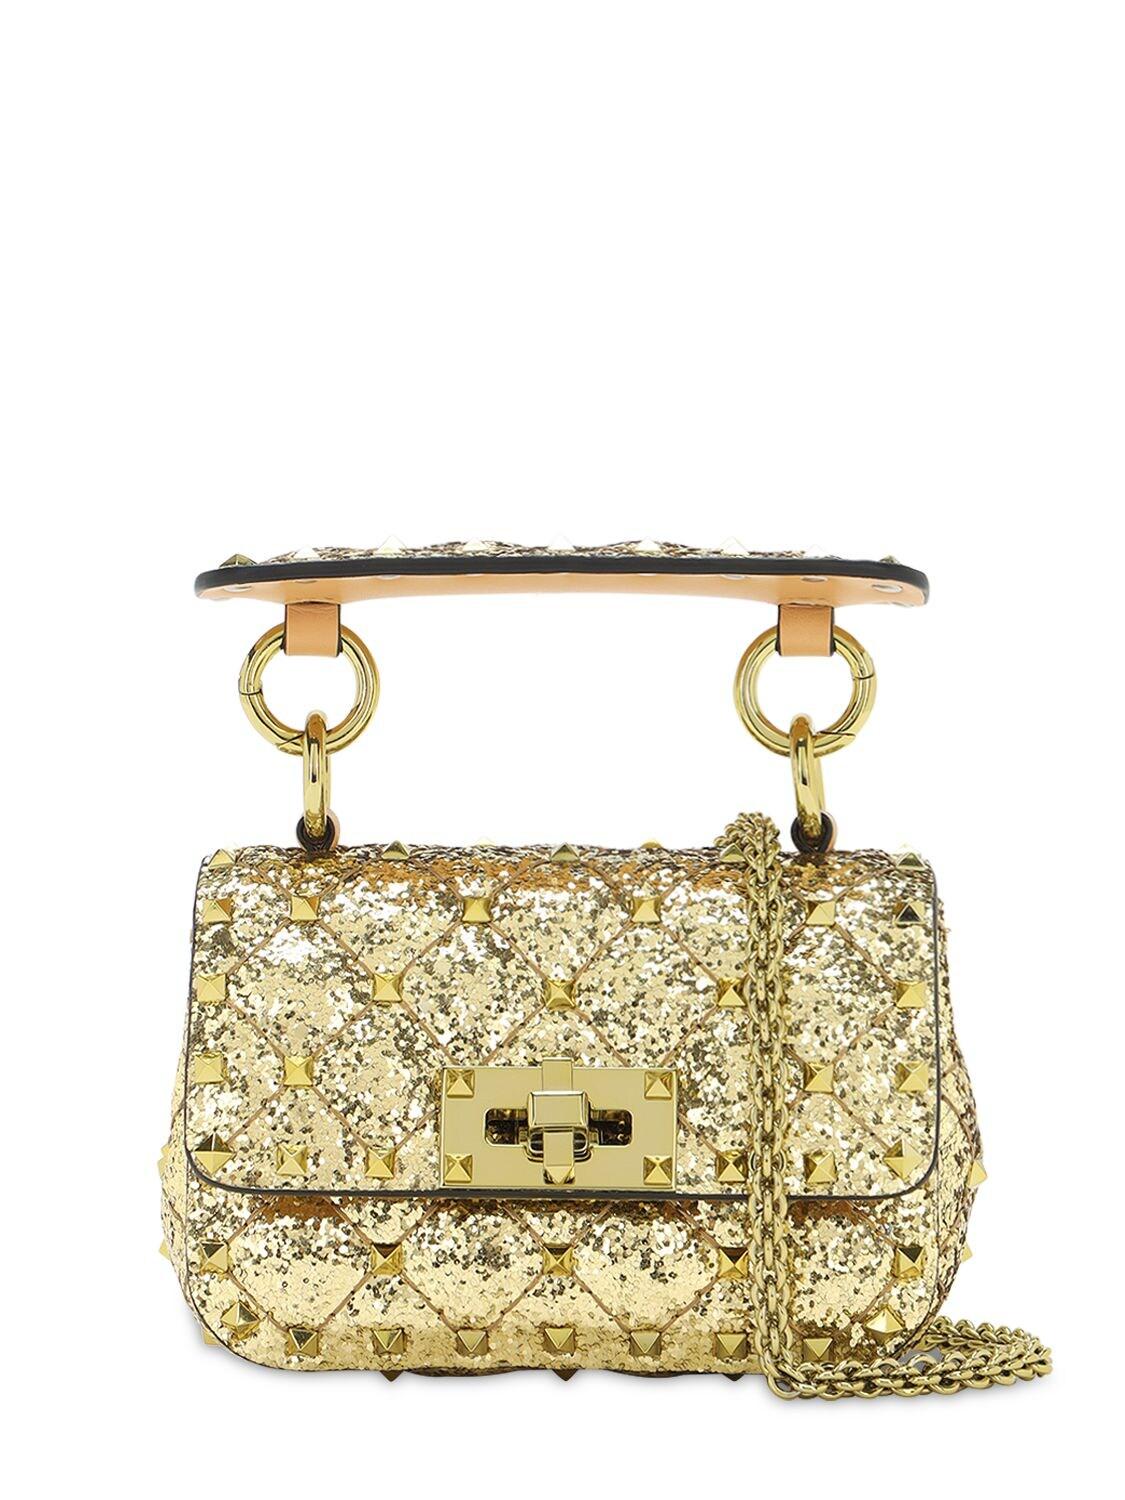 Valentino Garavani Micro Rockstud Spike Glitter Leather Bag in Gold ...